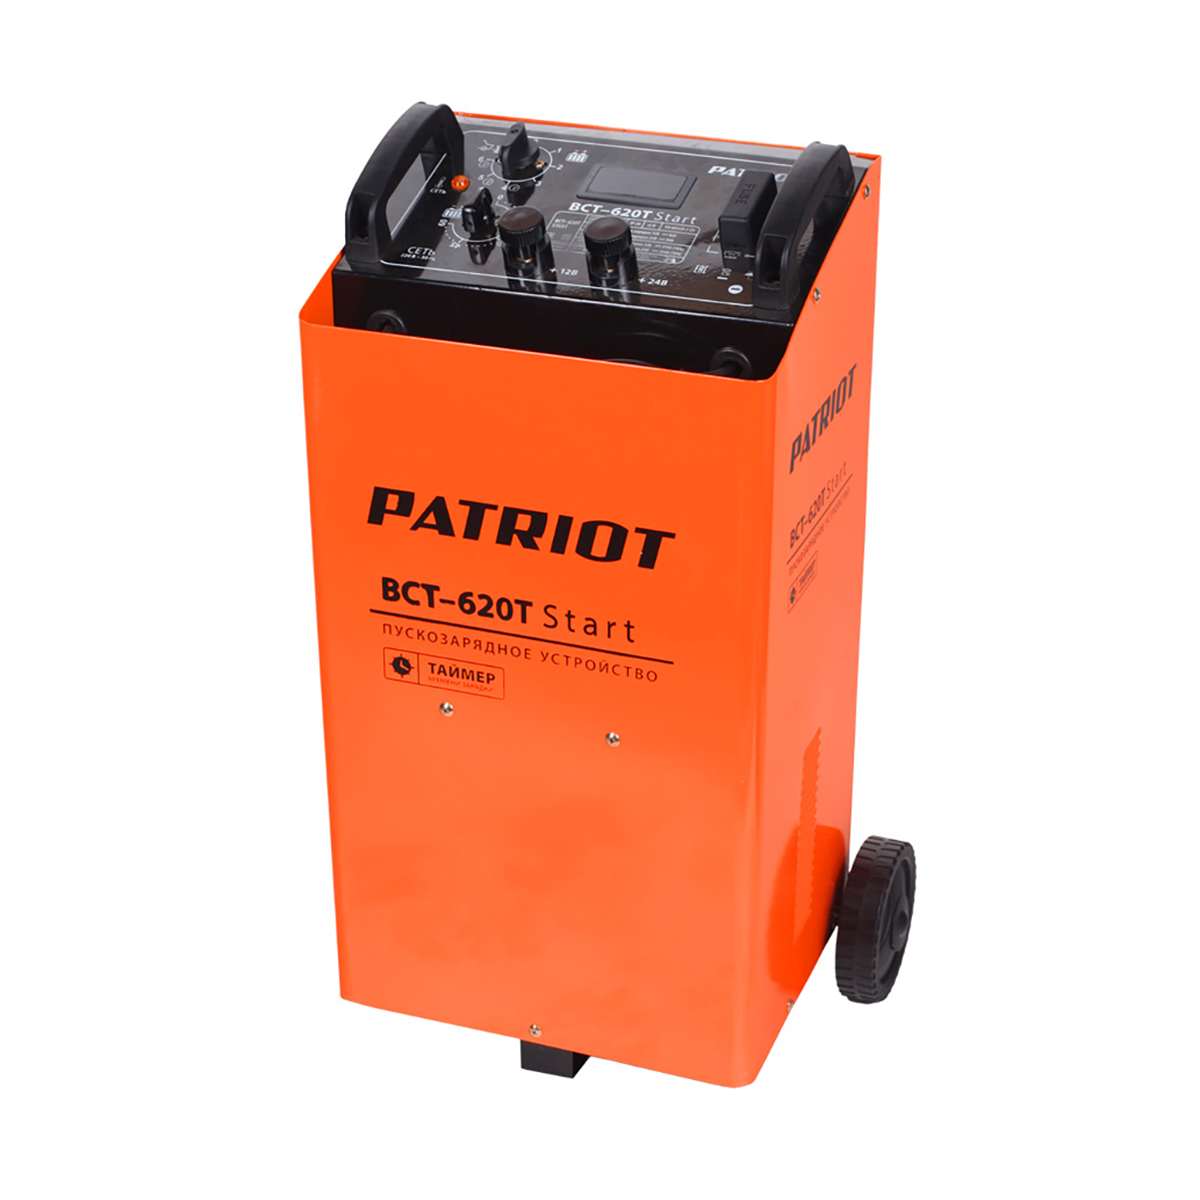 Пускозарядное устройство bct-620t start (1) "patriot" 650301565